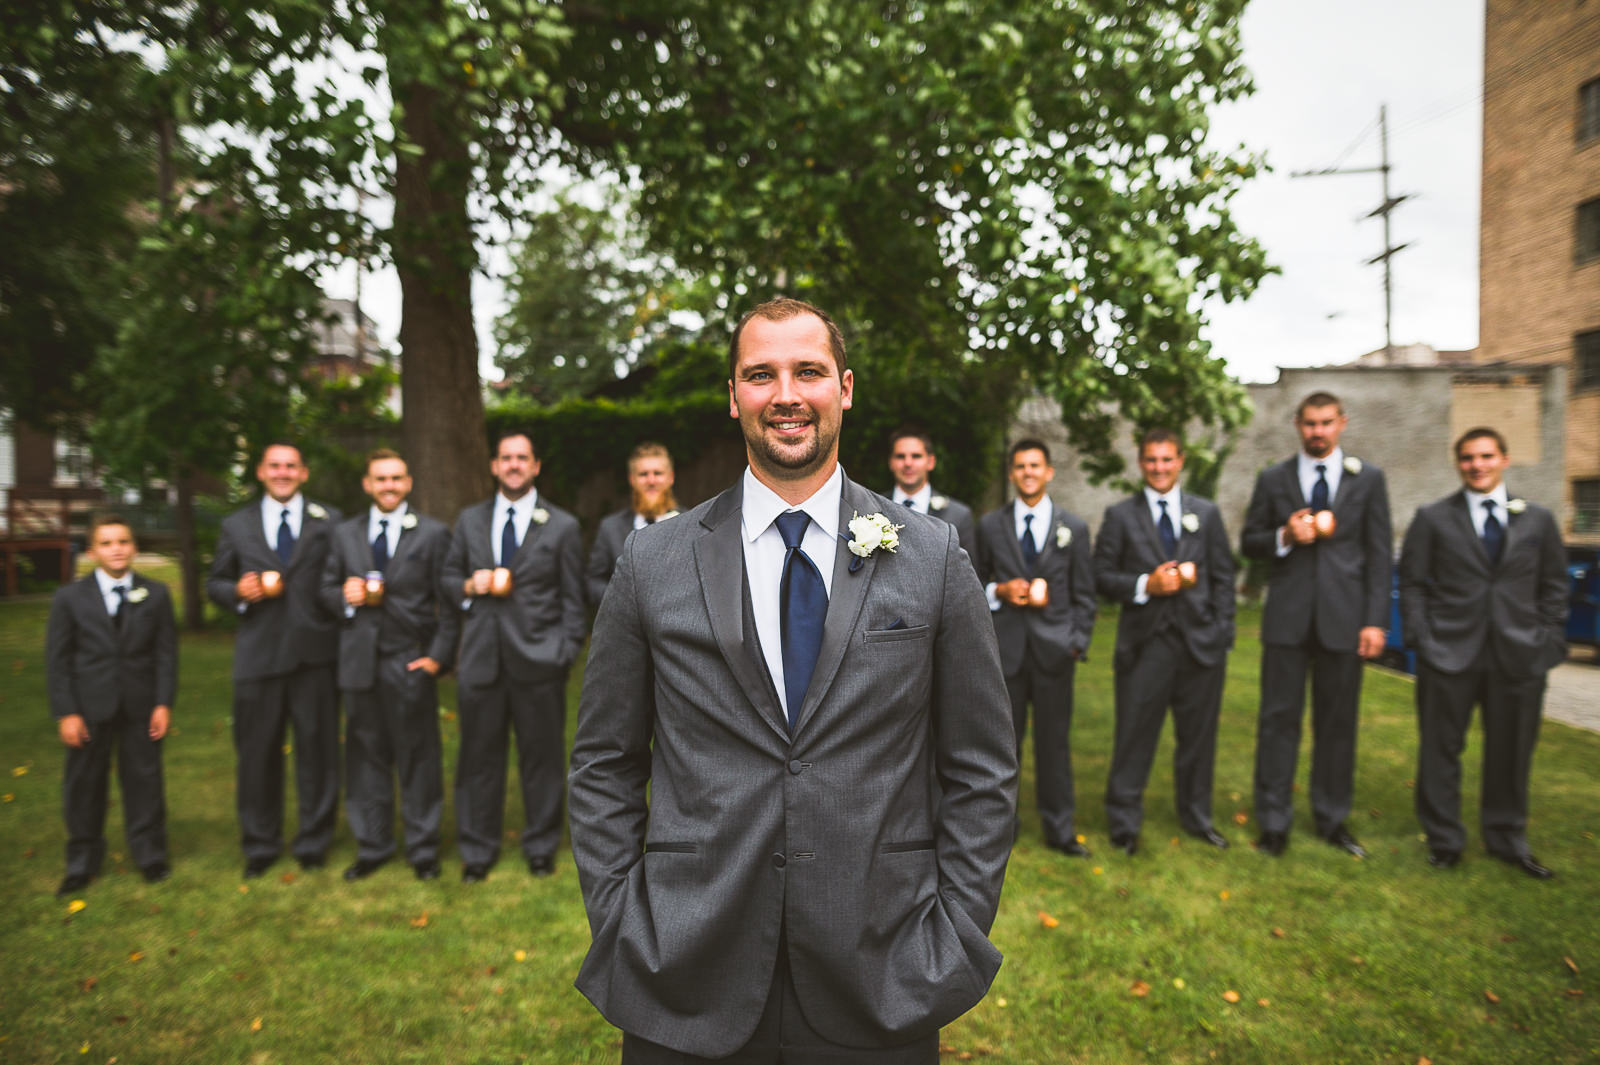 42 great groomsmen photos